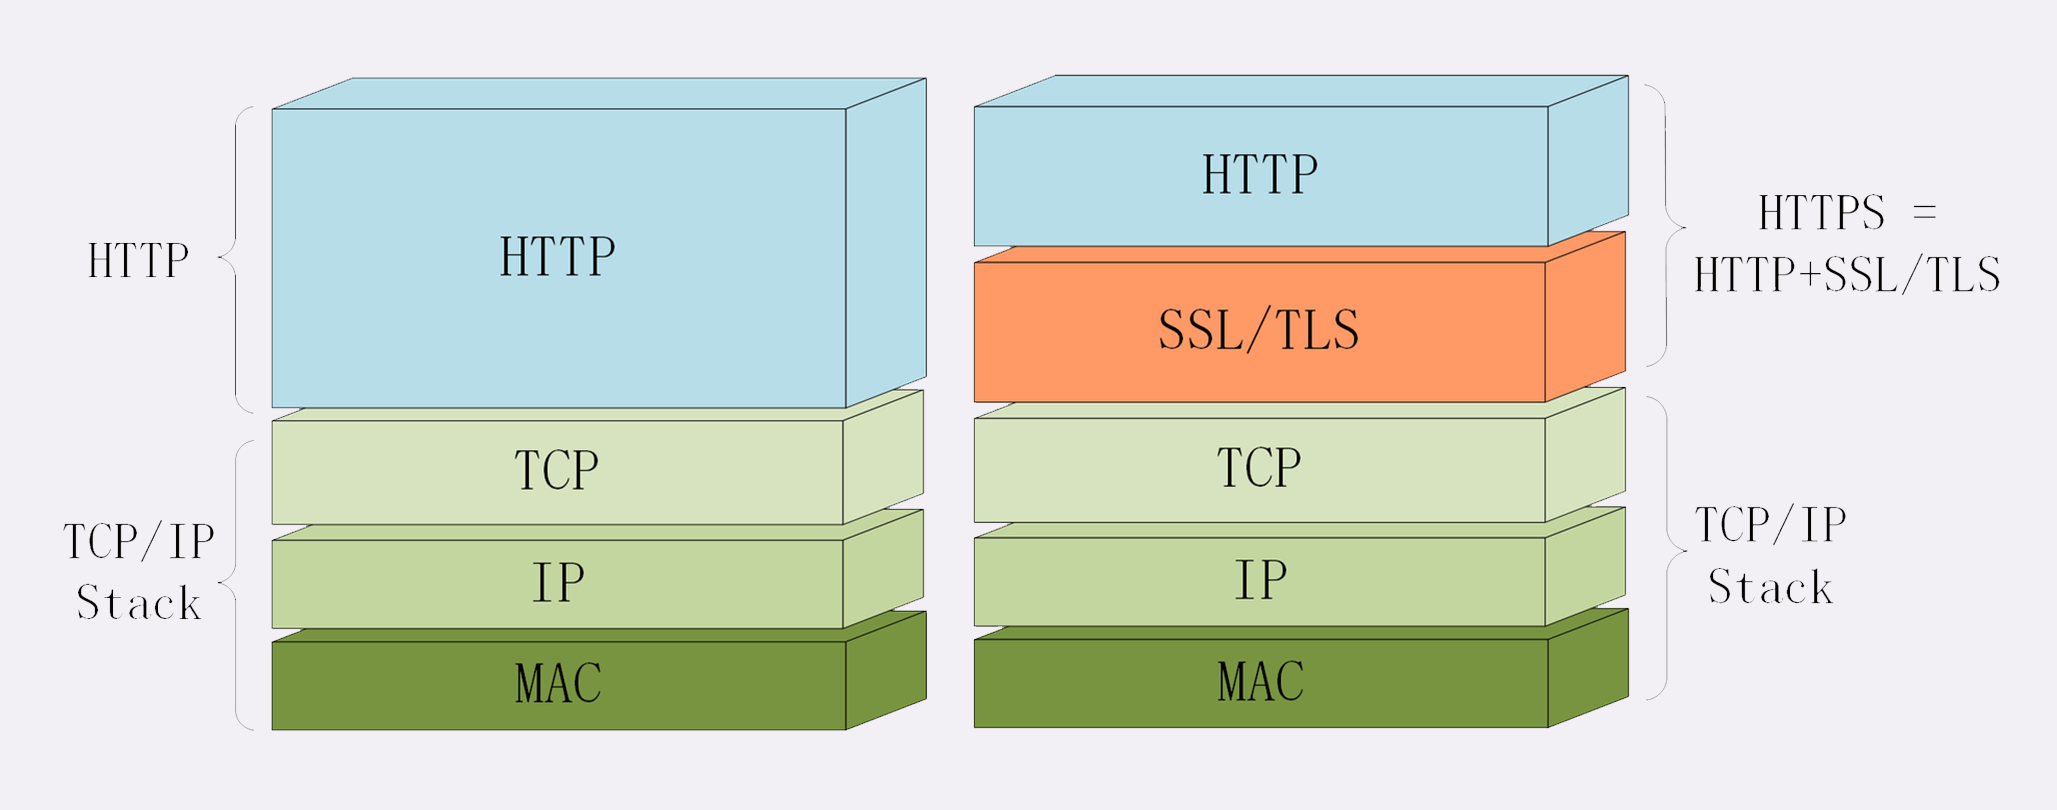 HTTPS 和 HTTP 对比图